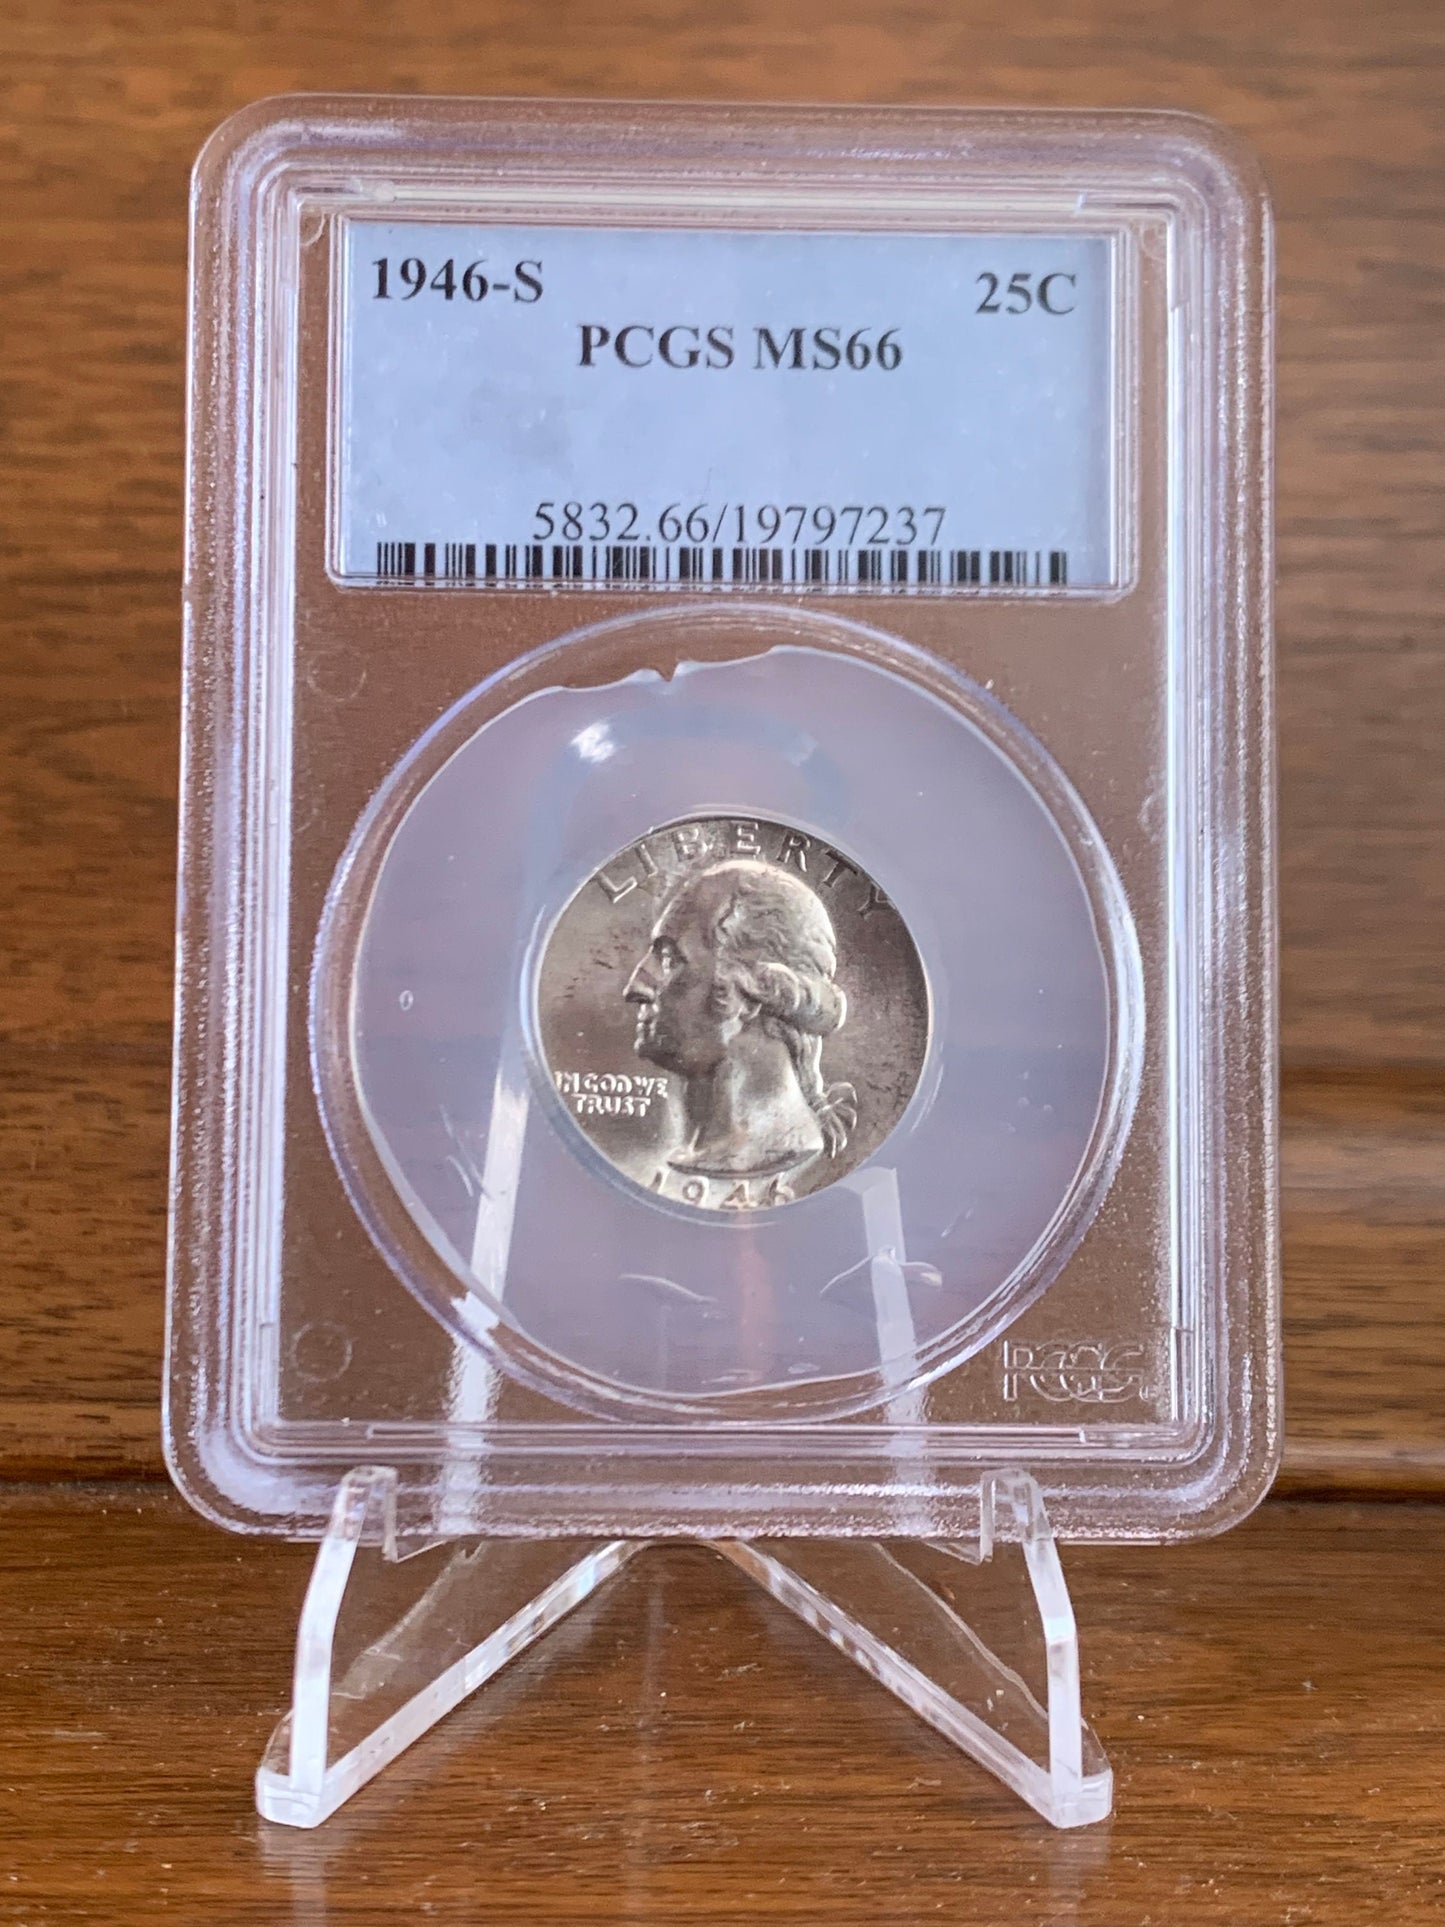 1946 S PCGS MS66 | SILVER - Washington Quarter - 25c US Coin #5832